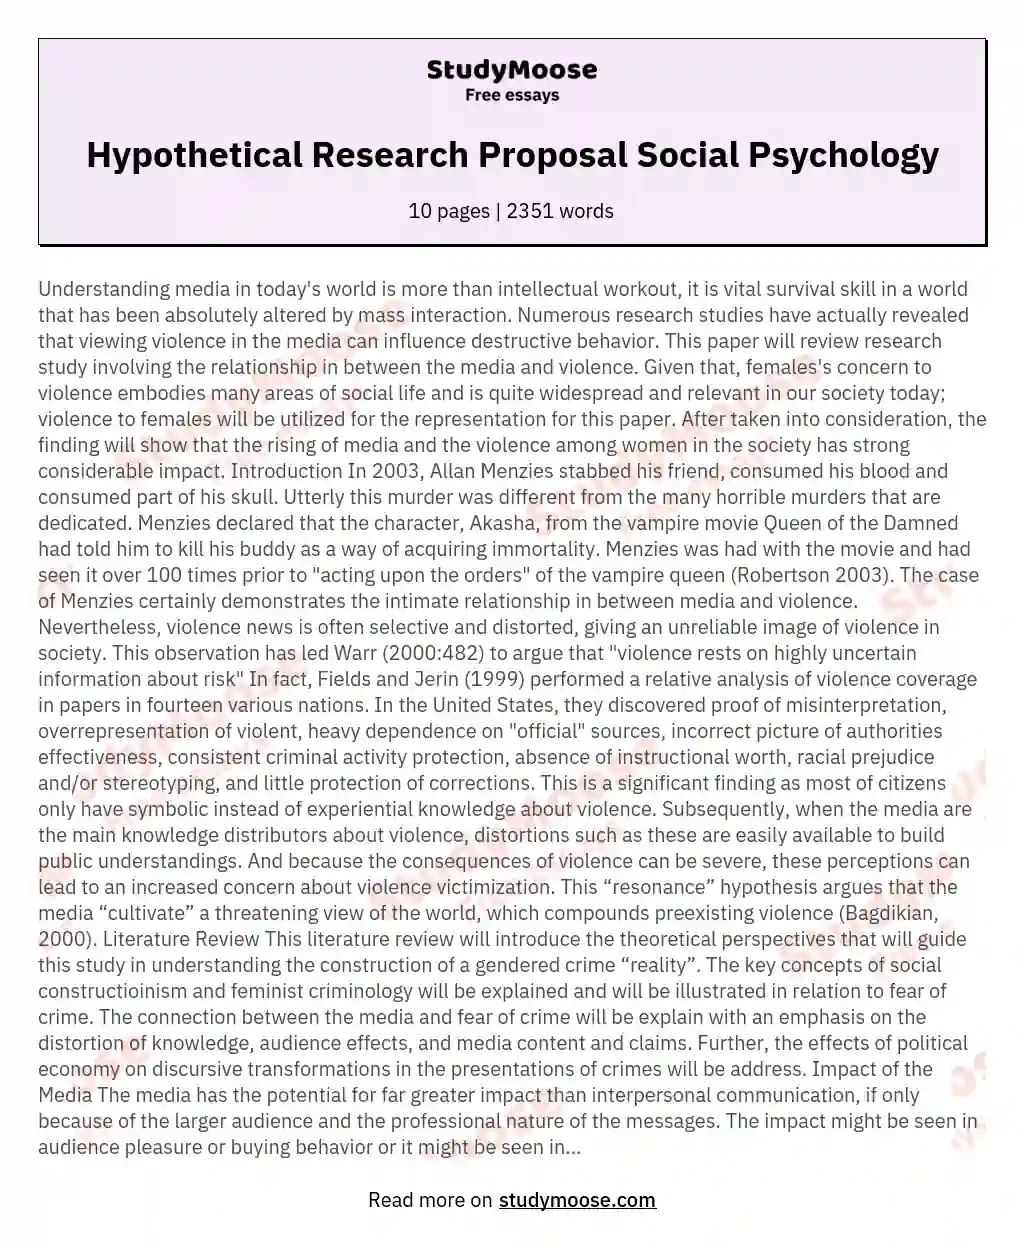 Hypothetical Research Proposal Social Psychology essay